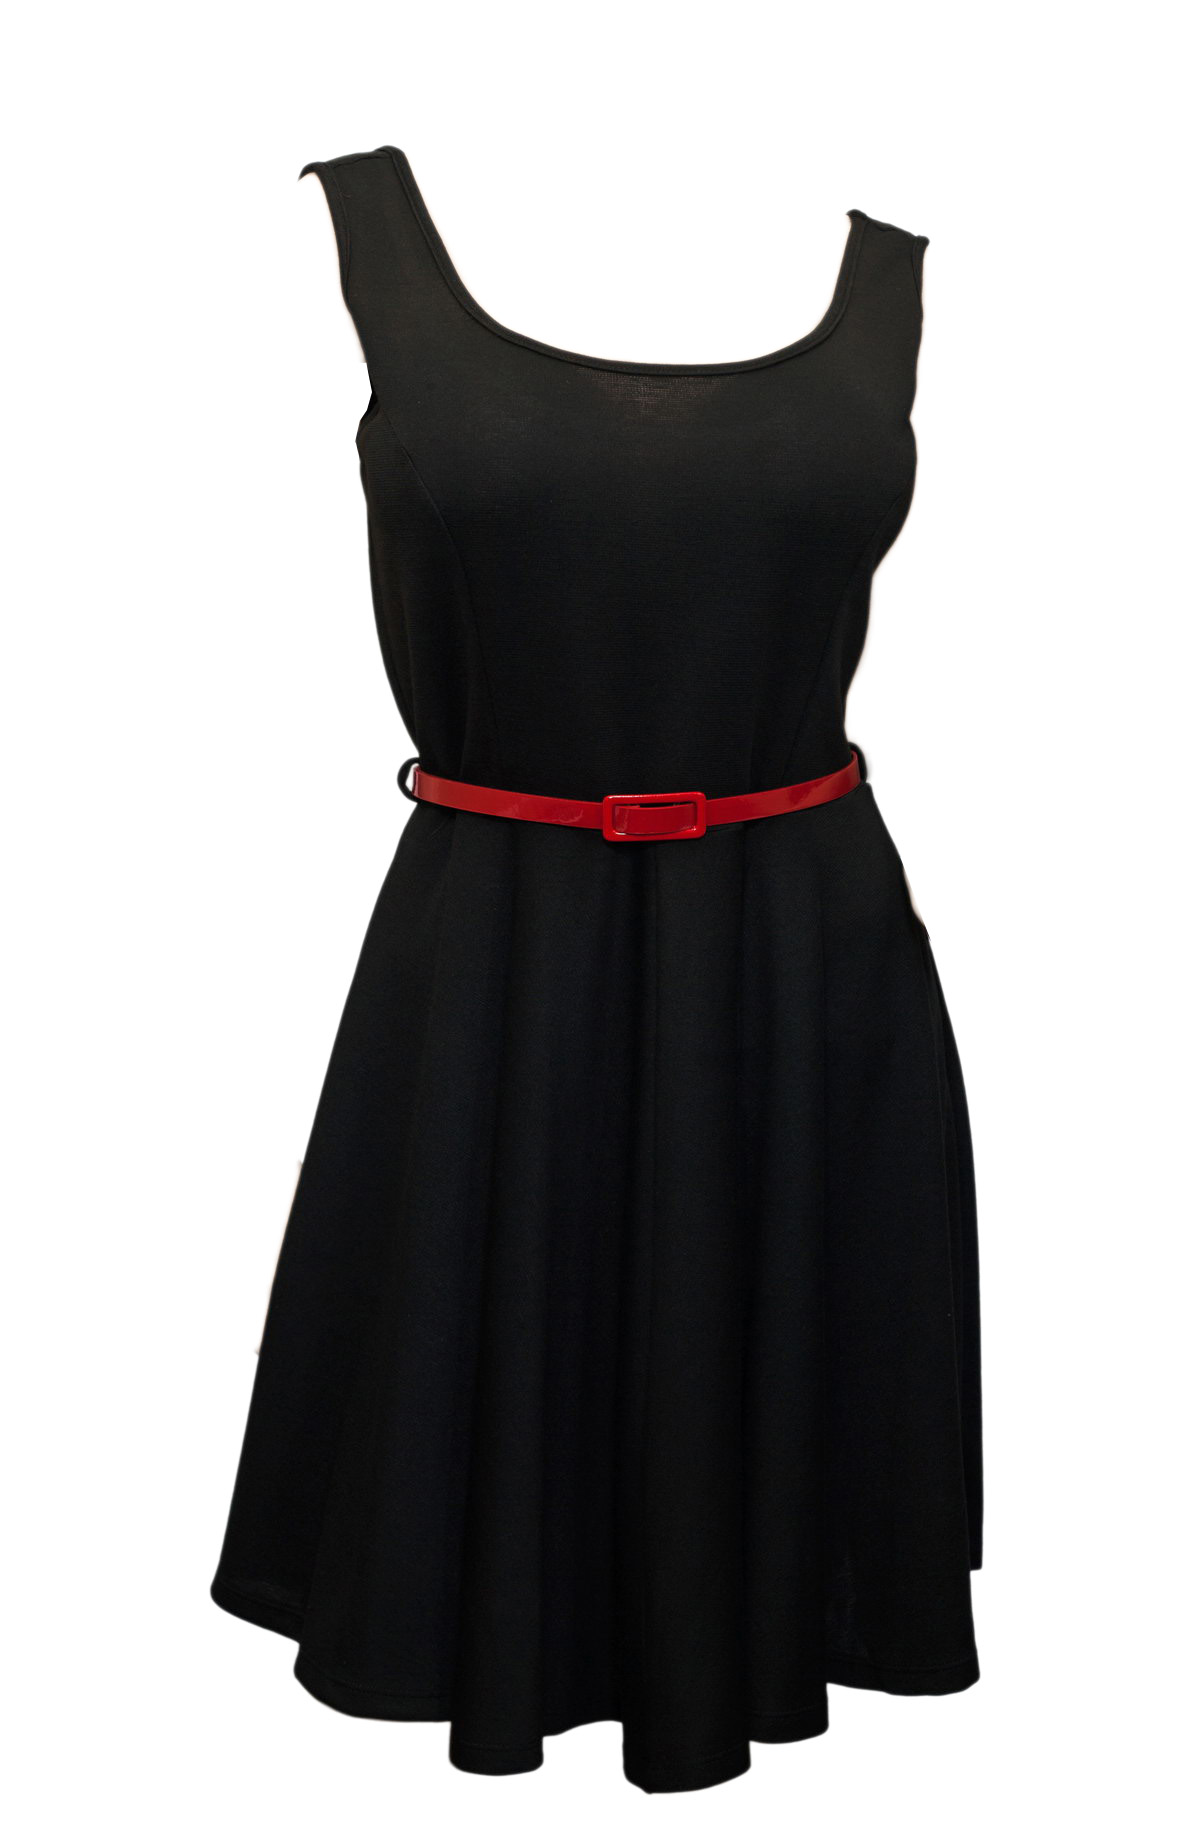 Plus size Sleeveless Knit Dress with Patent Belt Black | eVogues Apparel